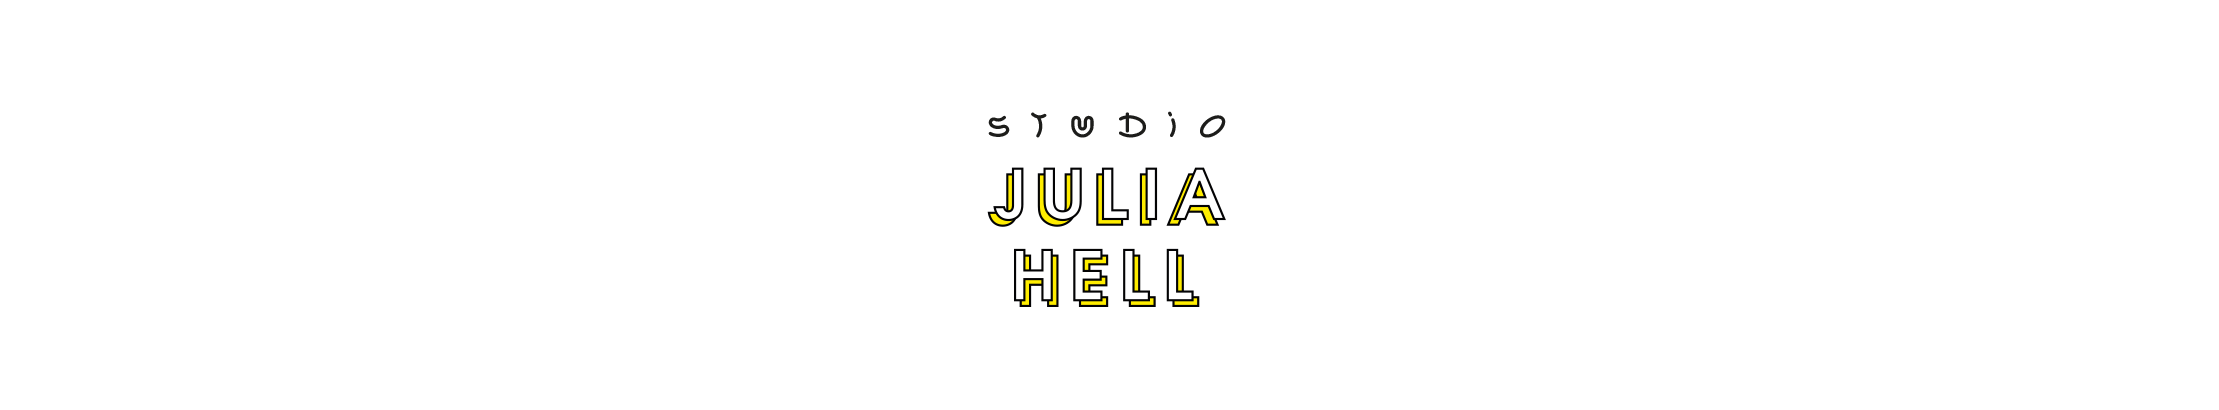 Julia Hell's profile banner